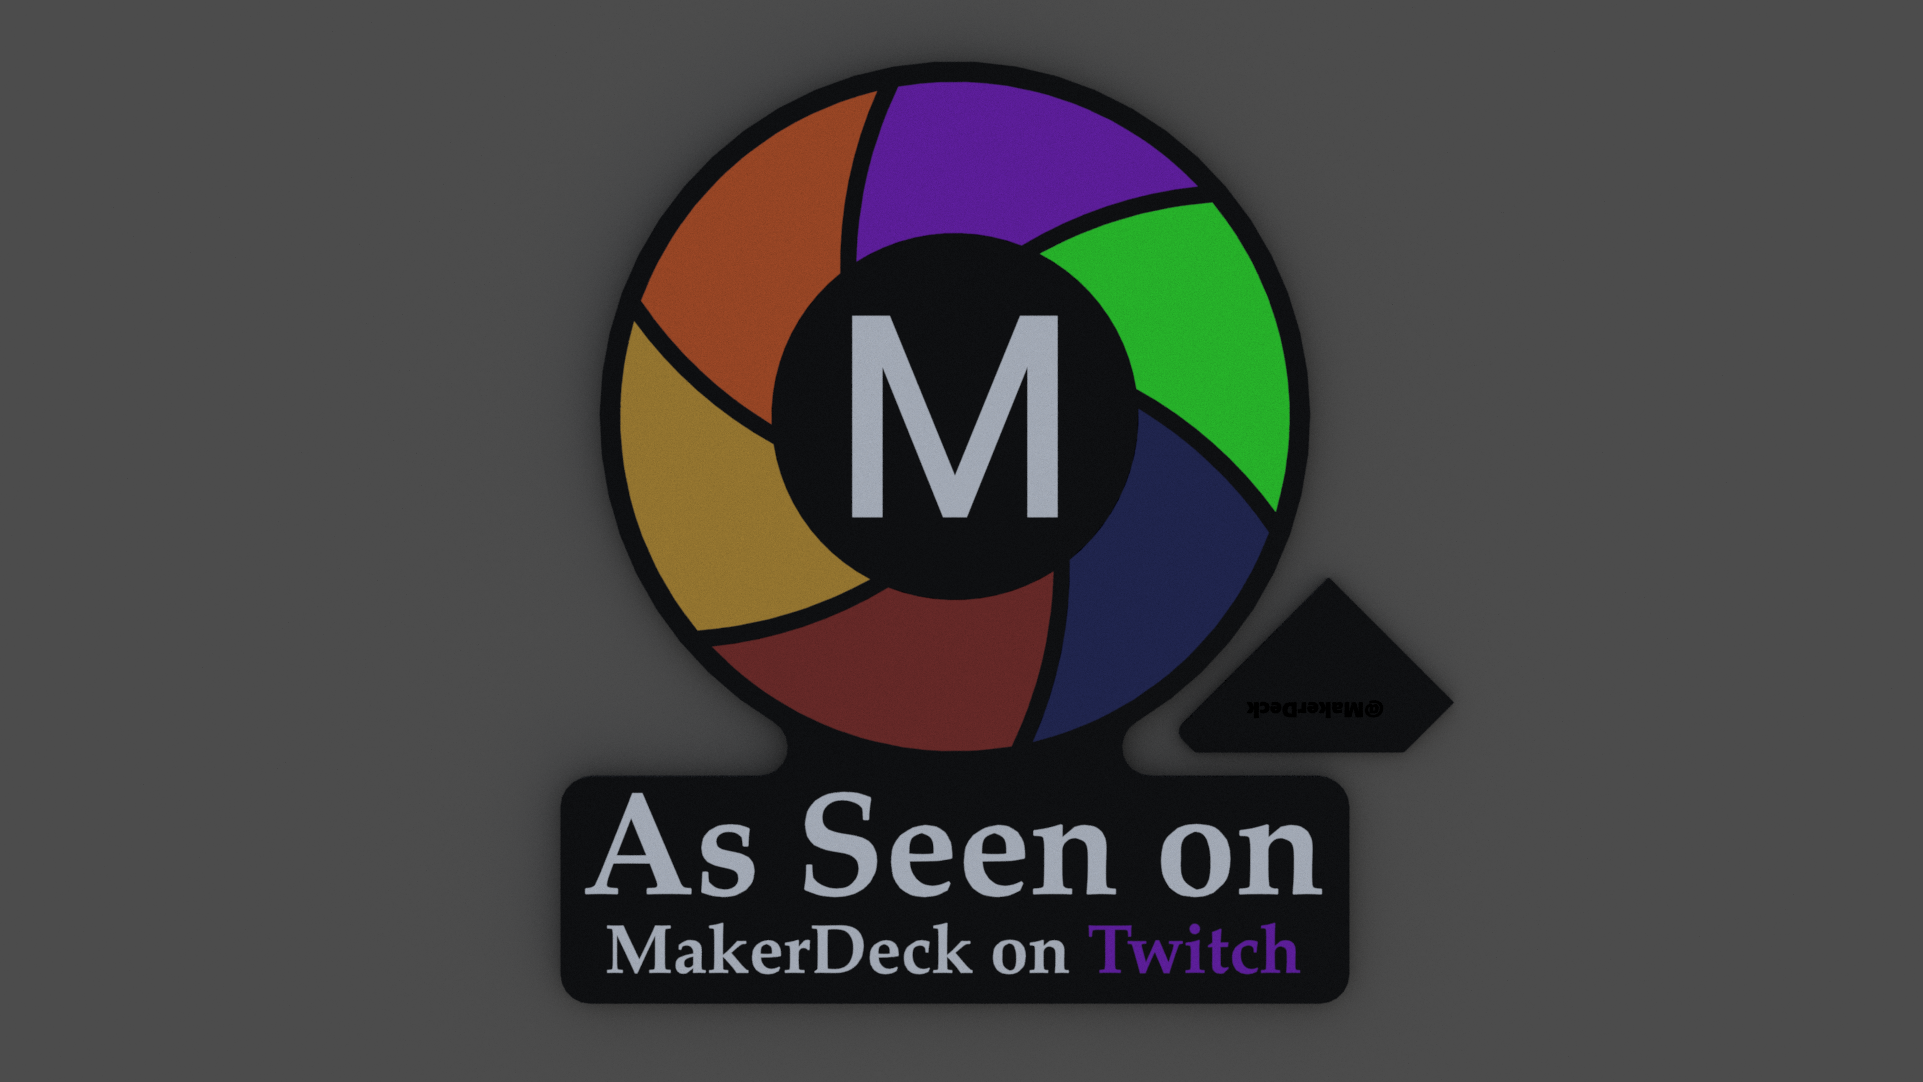 Remixed MakerDeck as seen on Twitch